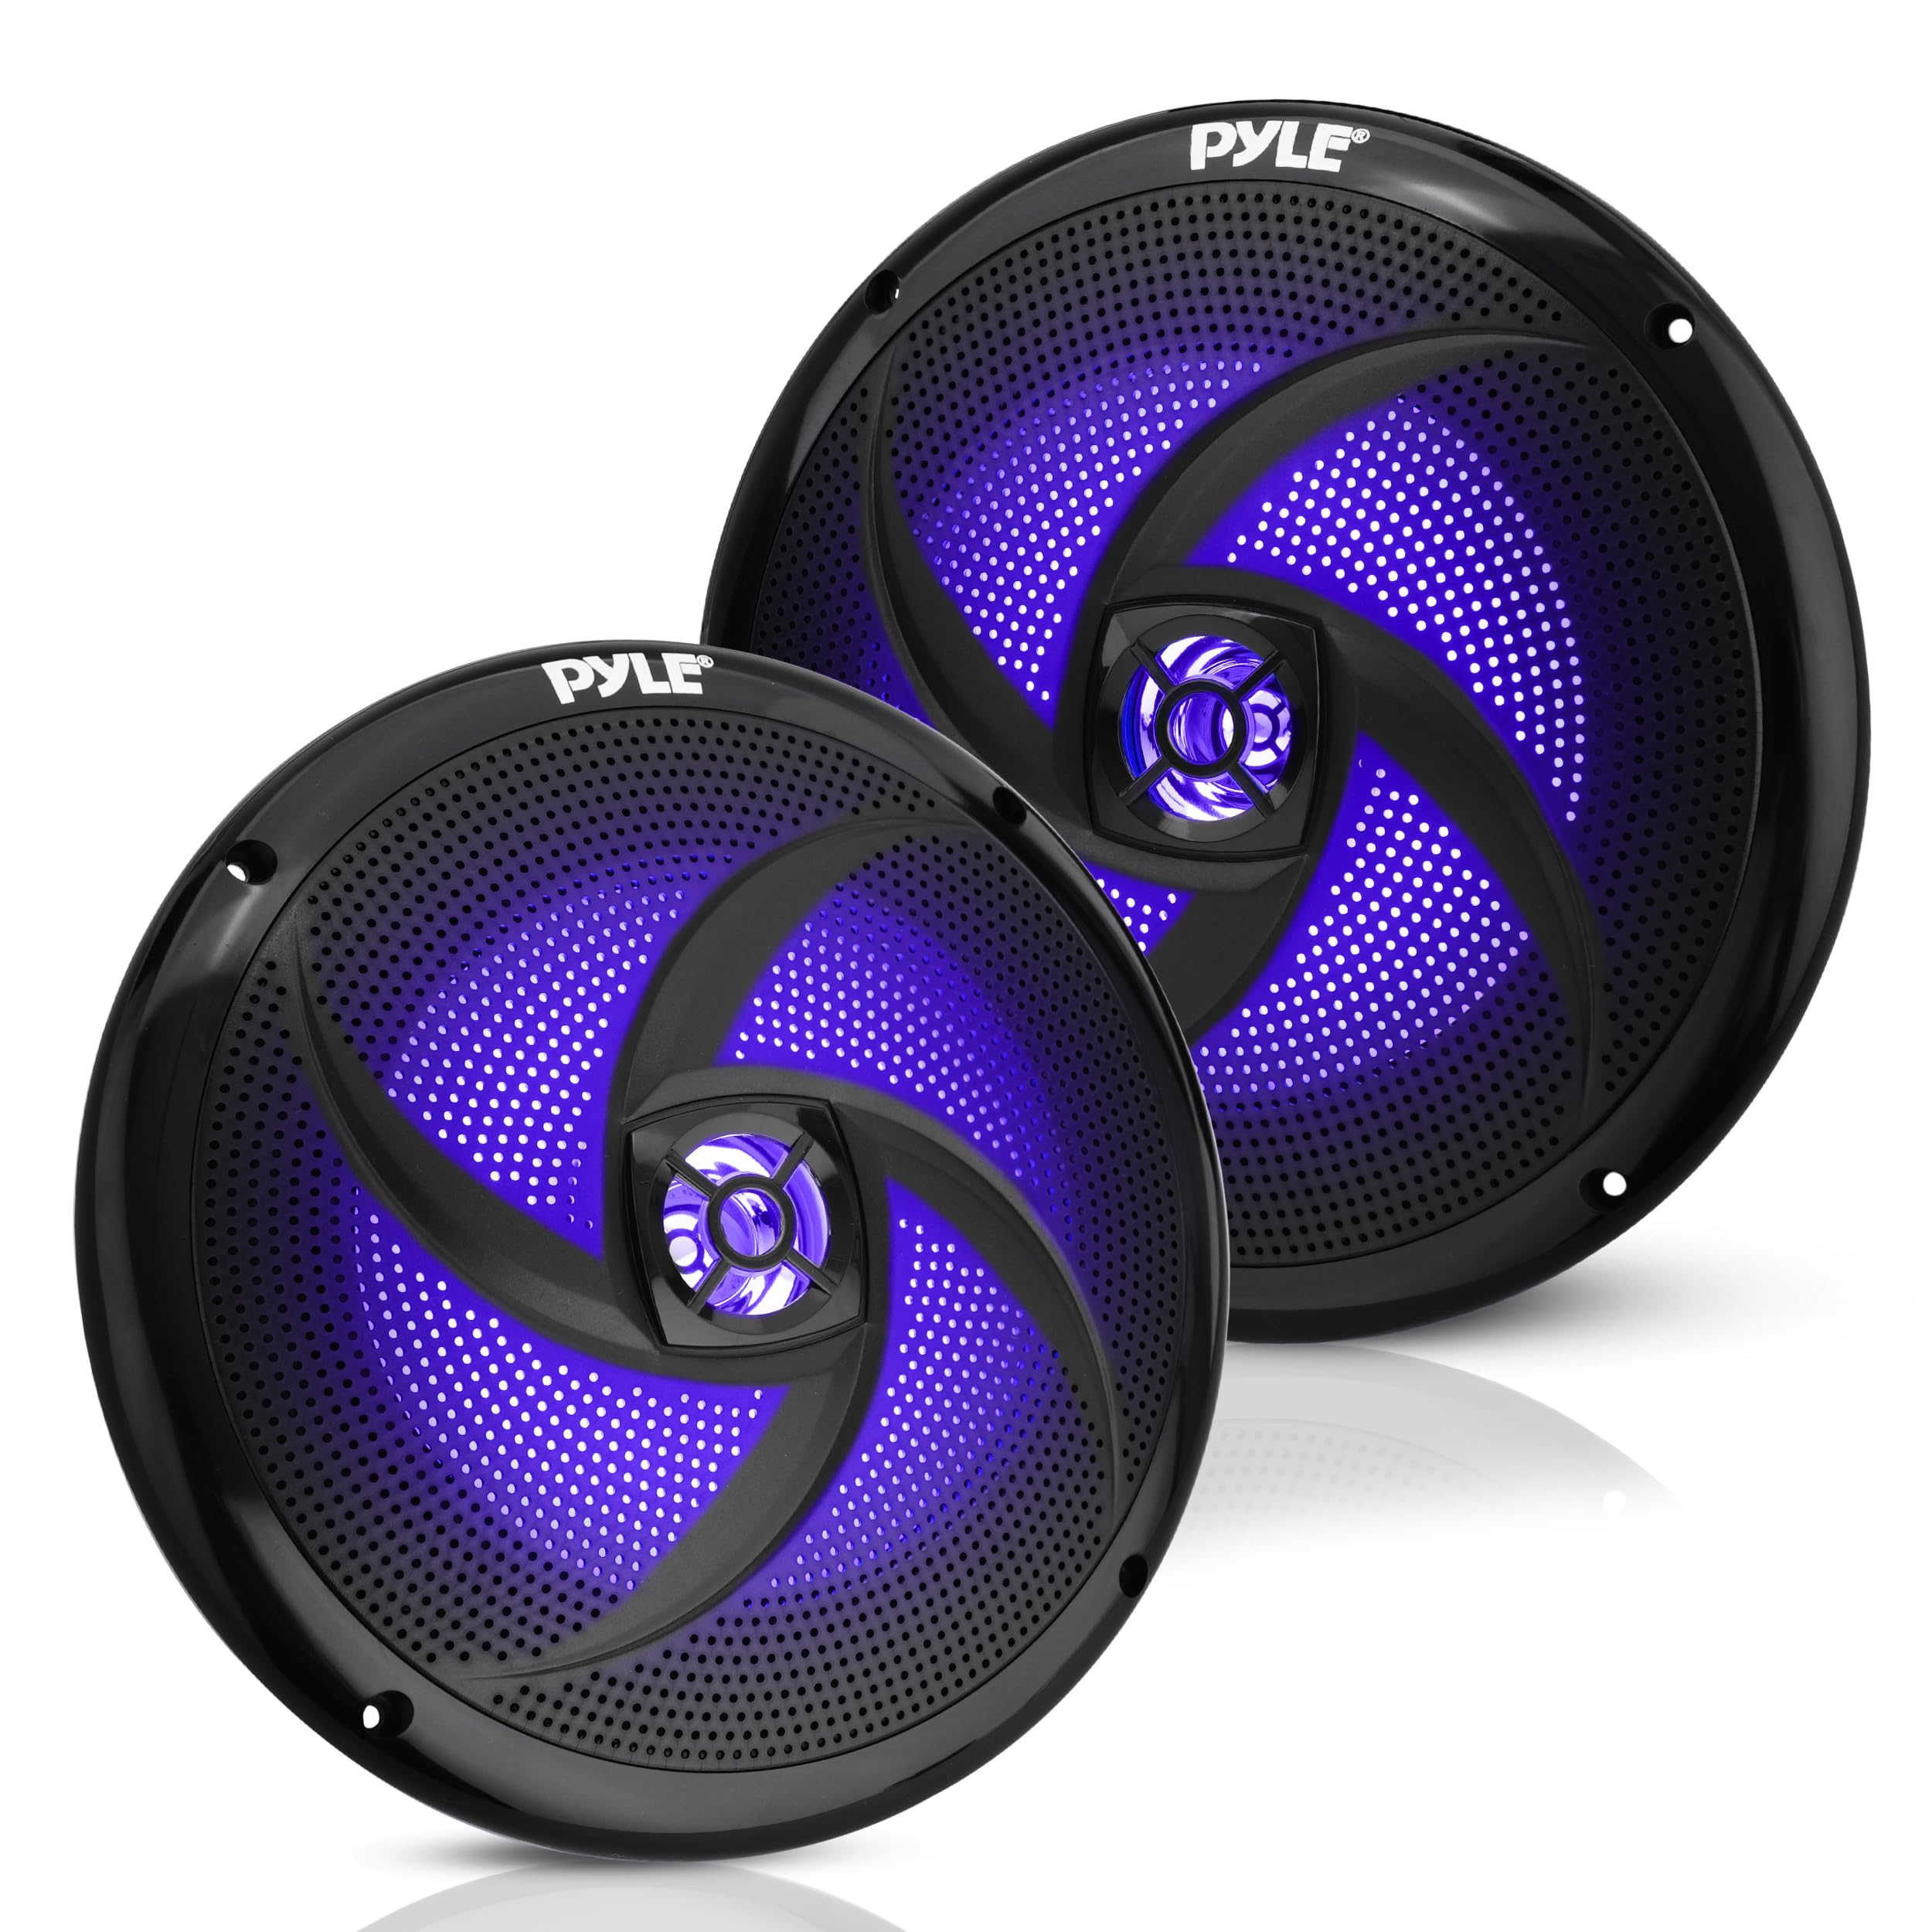 PyleUsa Dual 8'' Marine Speakers - 2 Way Full Range Stereo Sound, 160 Watt, Black - LED Light: Blue Illumination, Water-Resistant Design